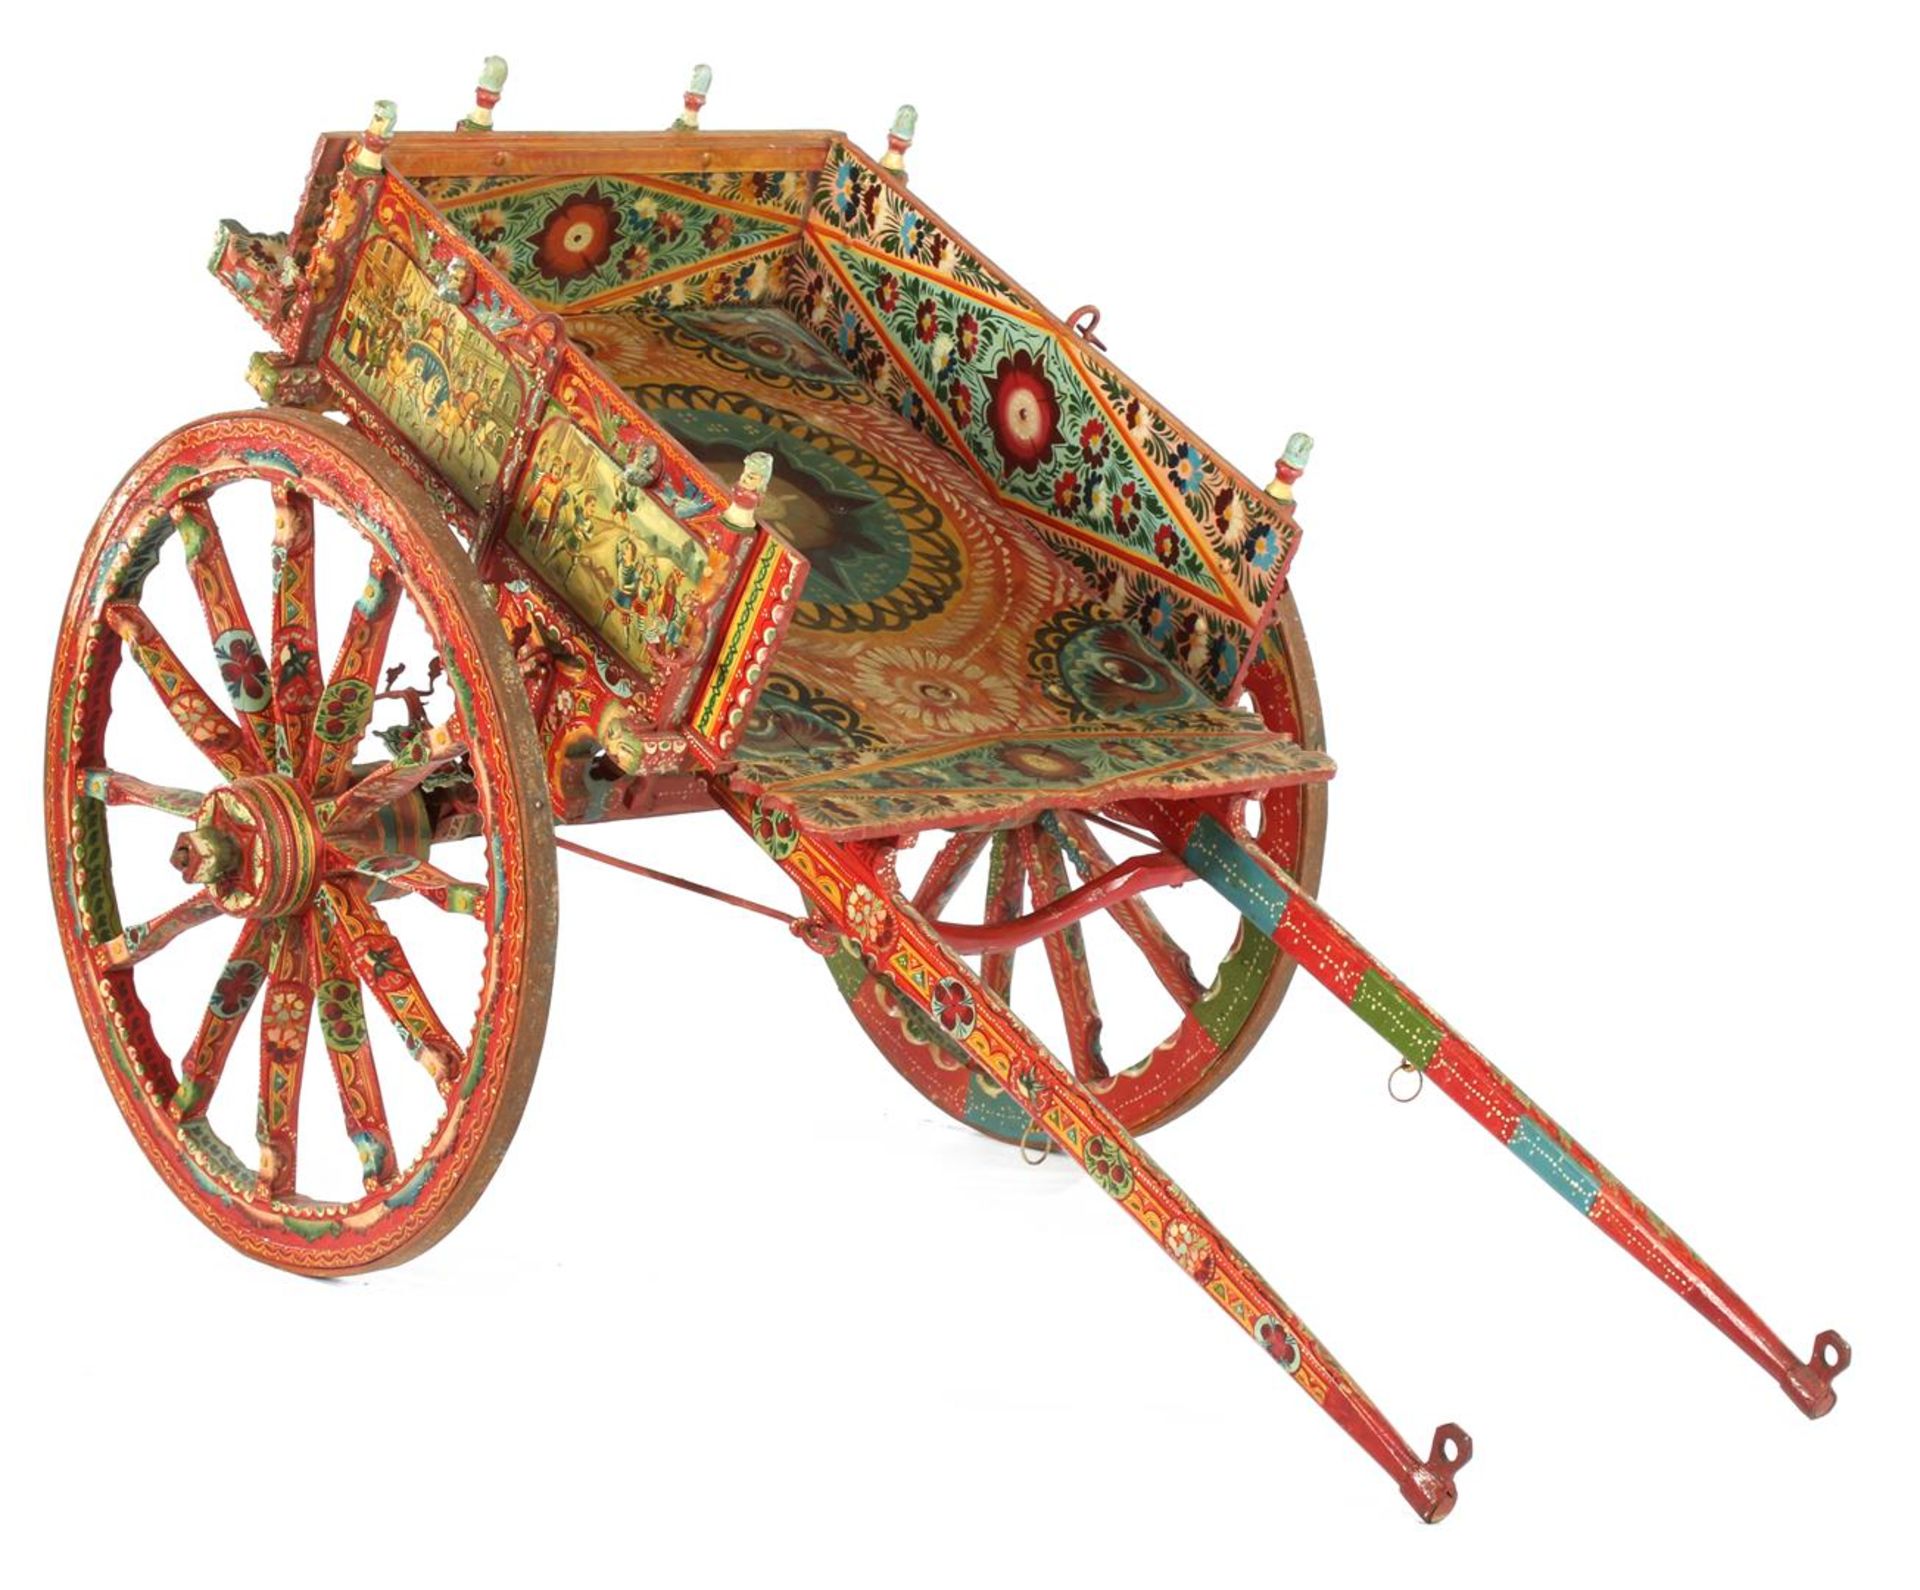 Original donkey cart with very nice stitching and beautiful painting